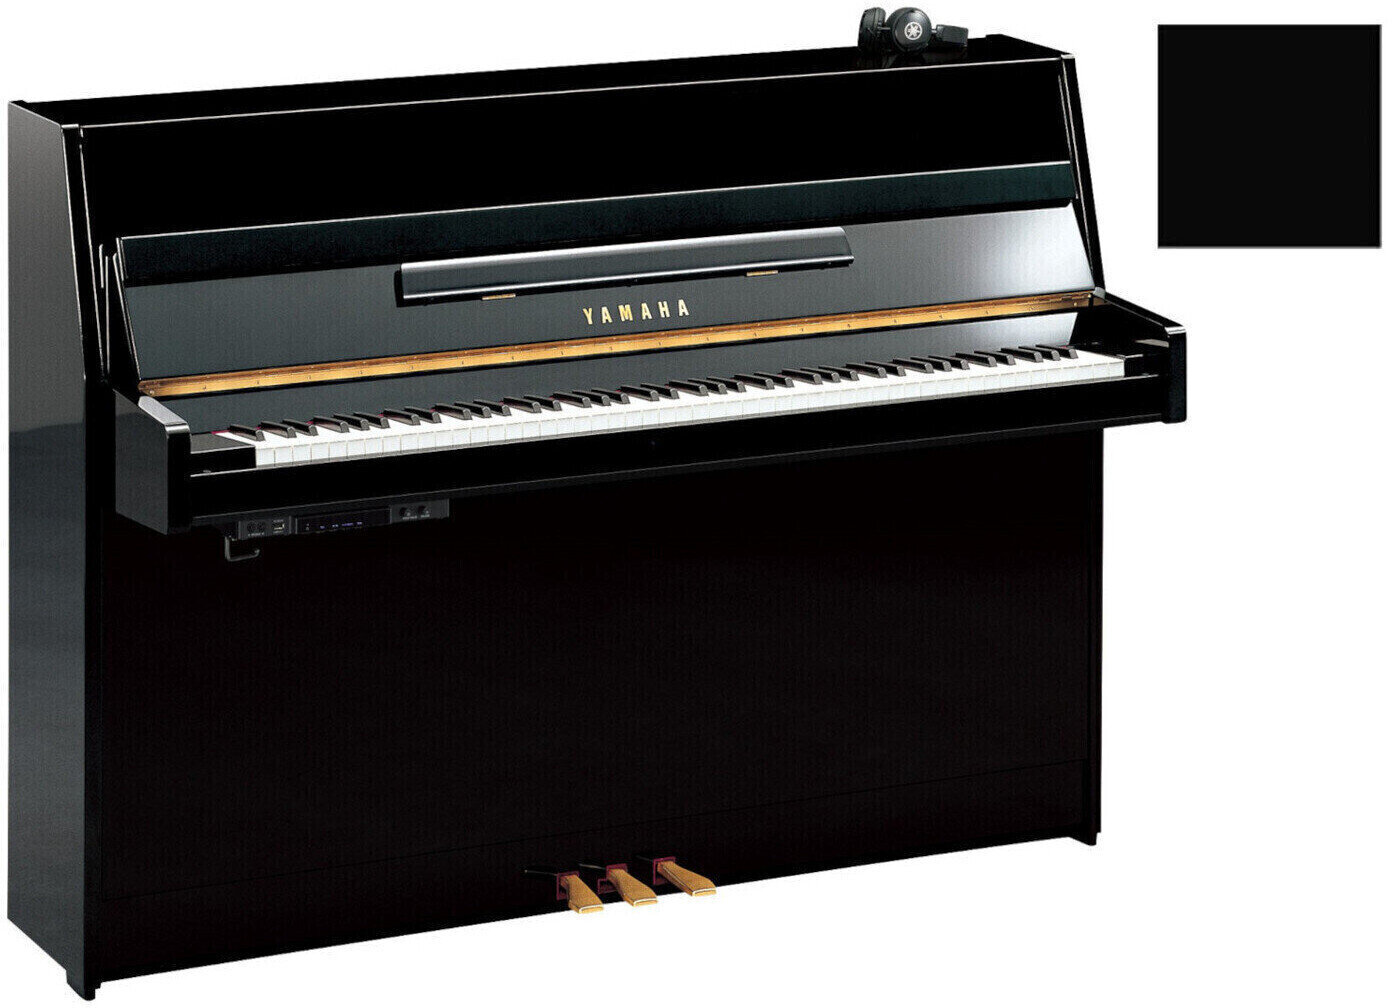 Piano Yamaha B1 SC2 Silent Piano Polished Ebony with Chrome